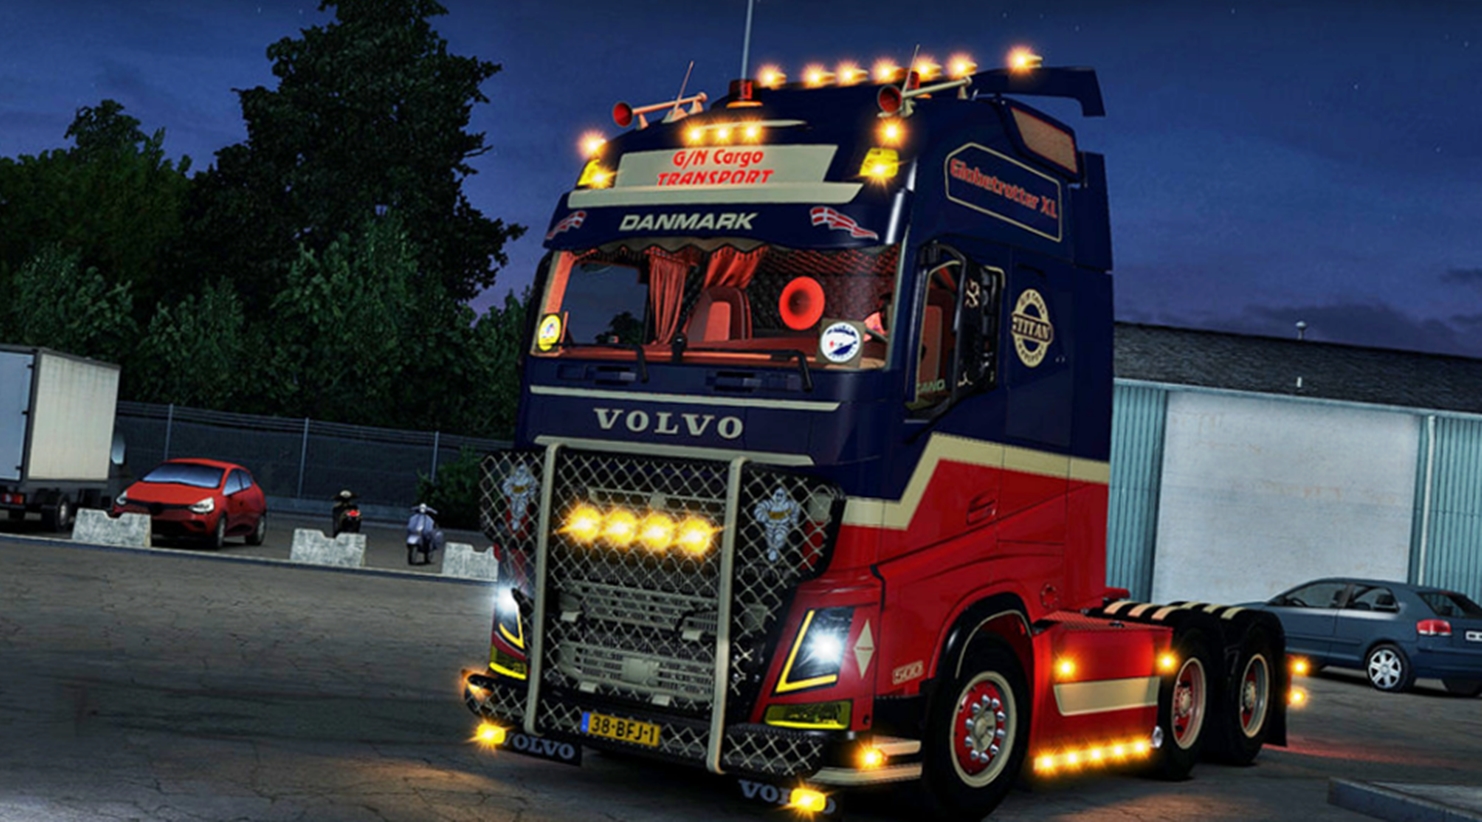 euro truck simulator 2 download free full version pc